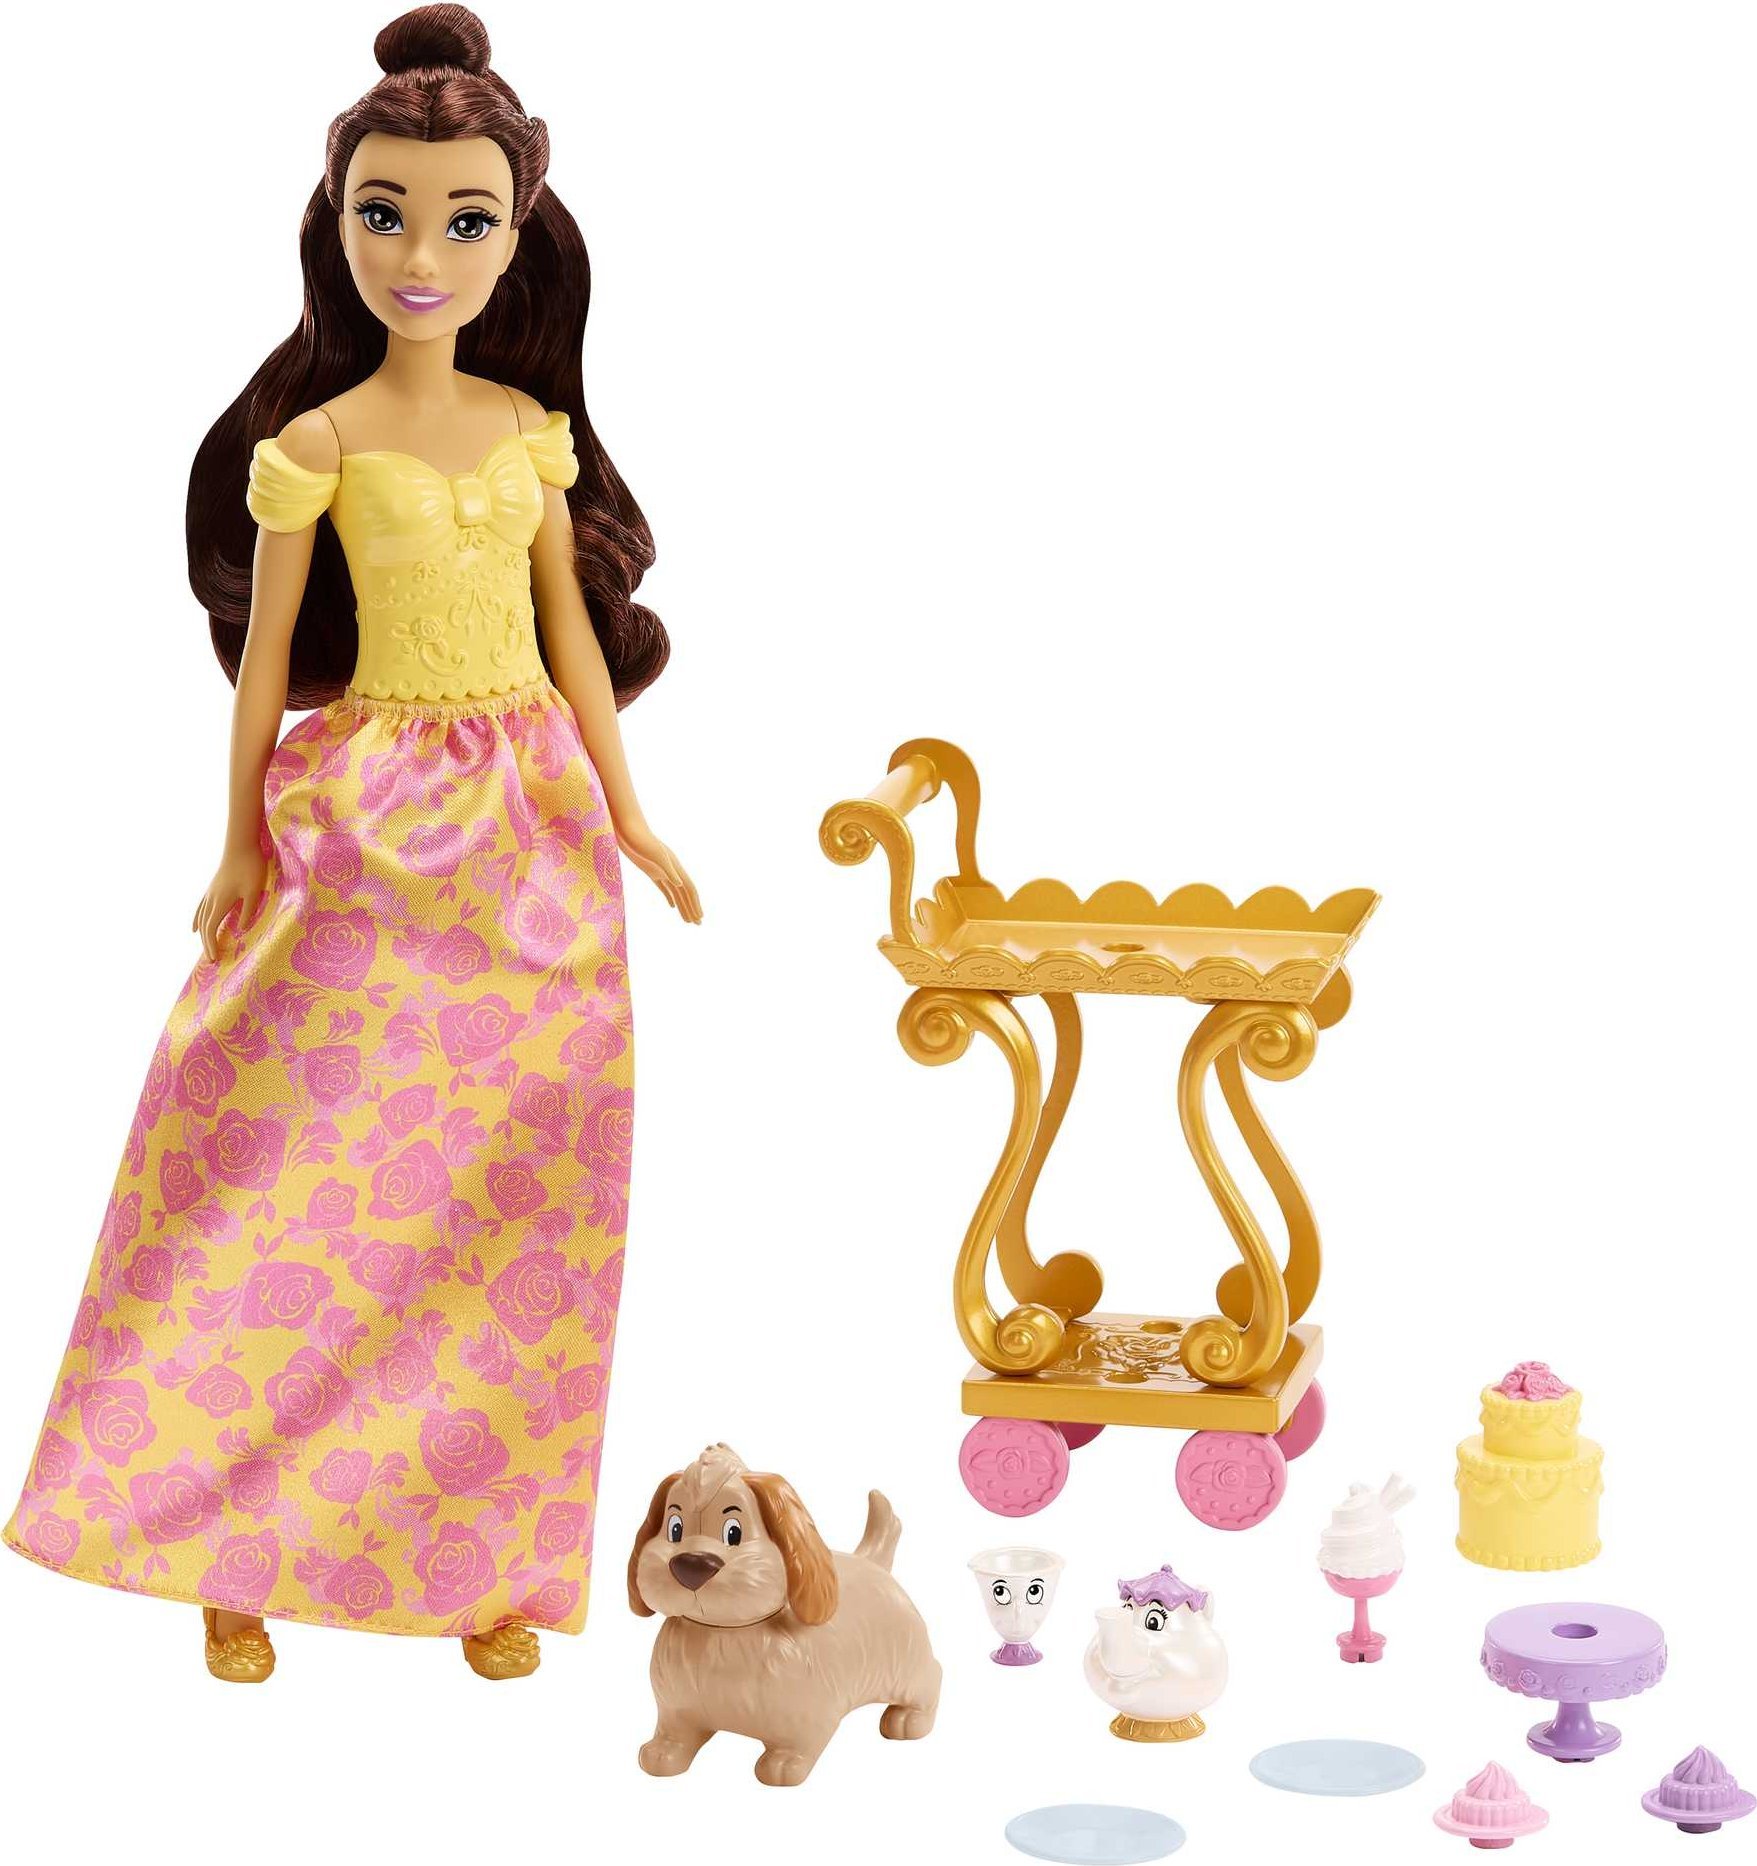 Mattel Lalka Disney Princess Bella i w?zek z podwieczorkiem GXP-863218 (194735120475) bērnu rotaļlieta